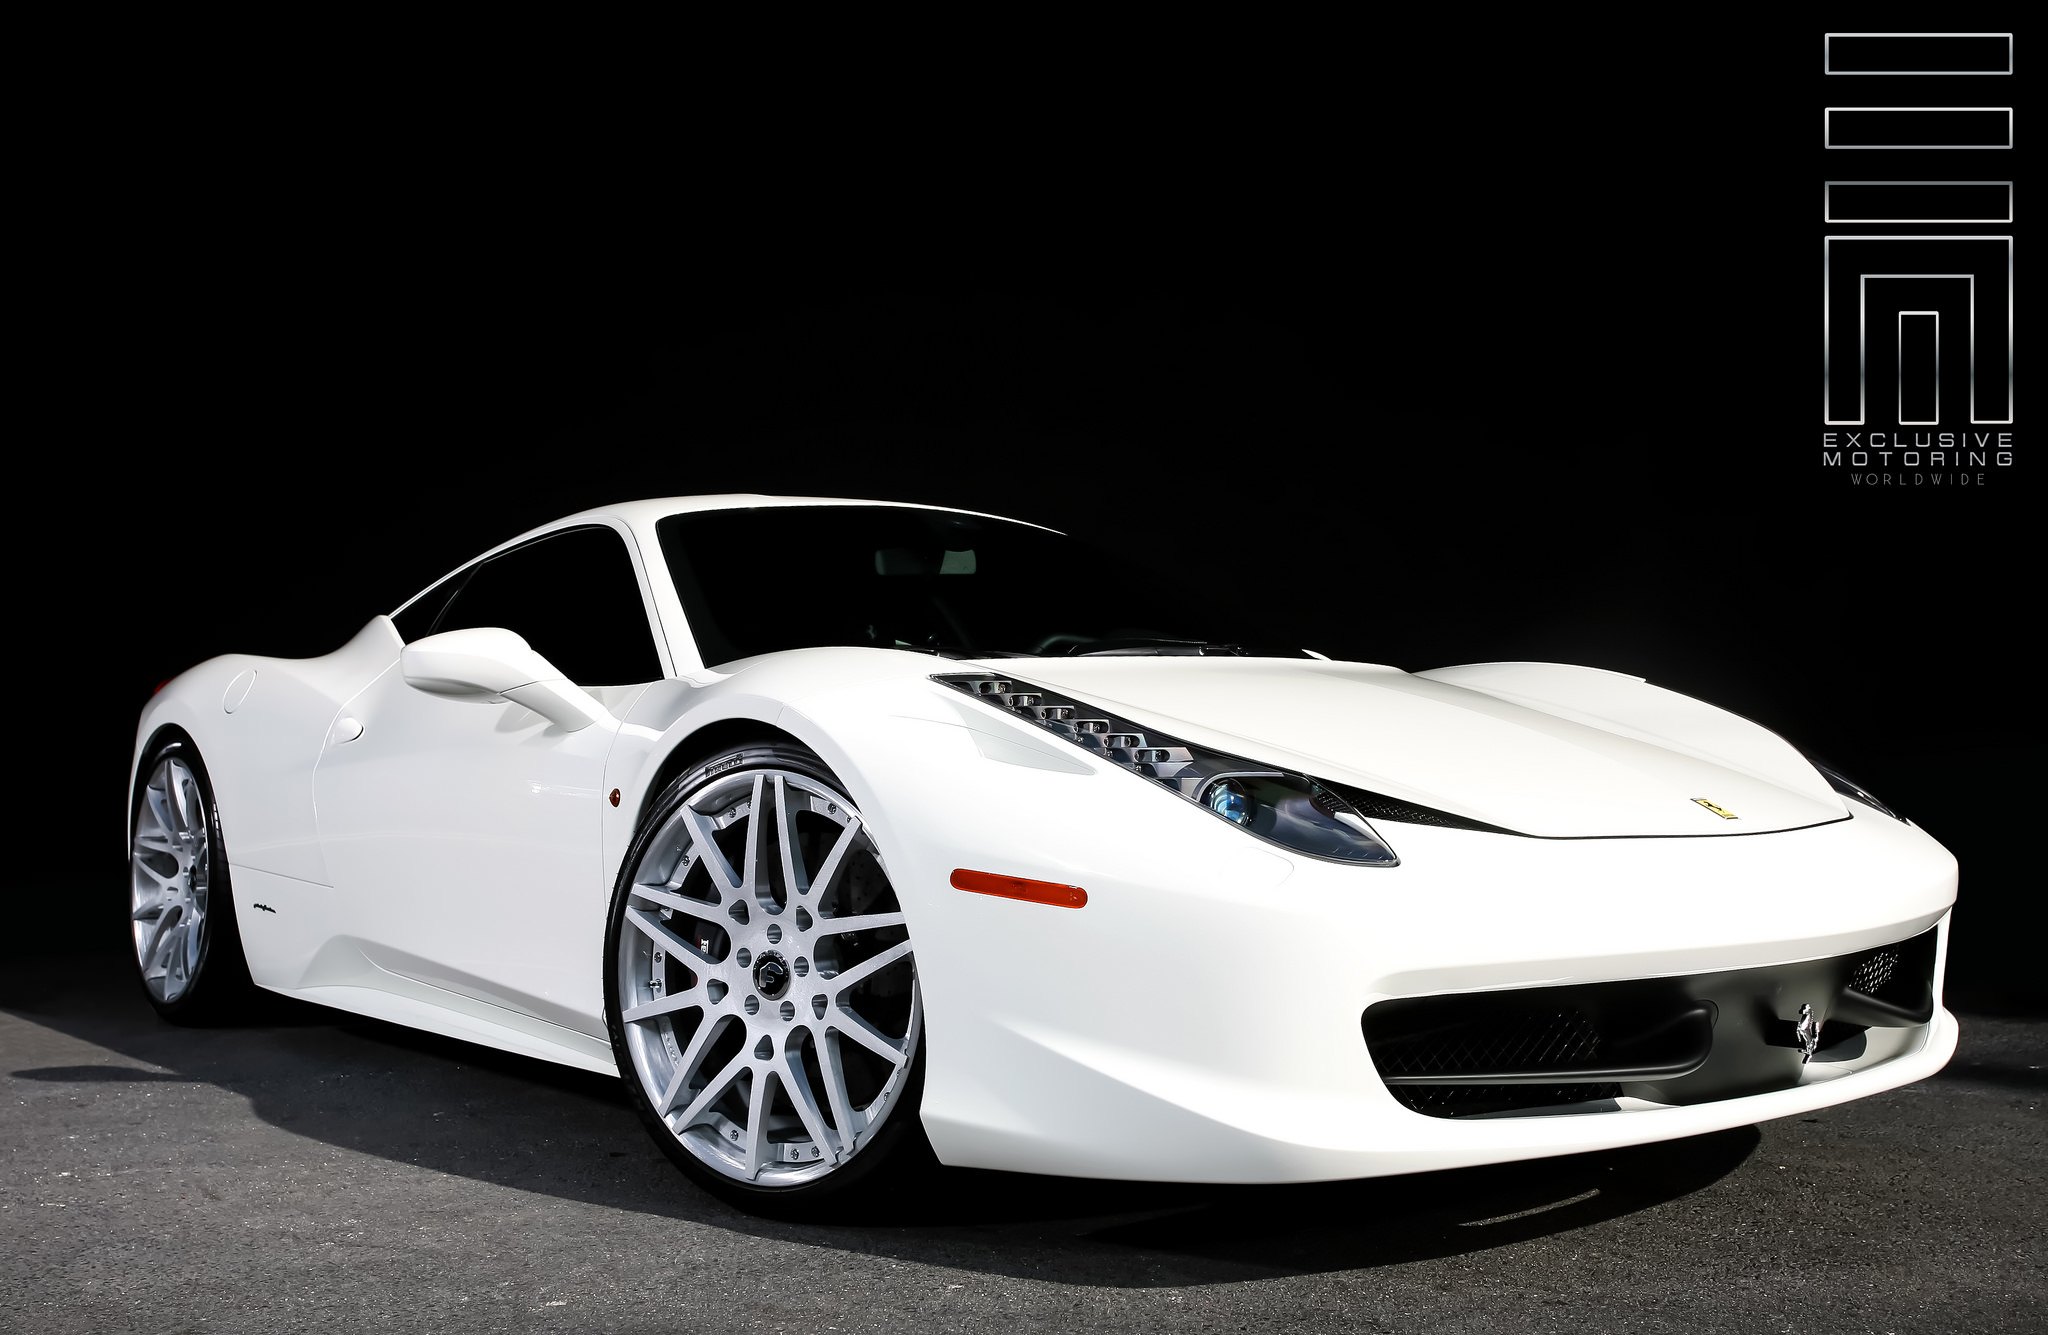 Pure White Ferrari 458 on Forgiatos by Exclusive Motoring — CARiD.com Gallery